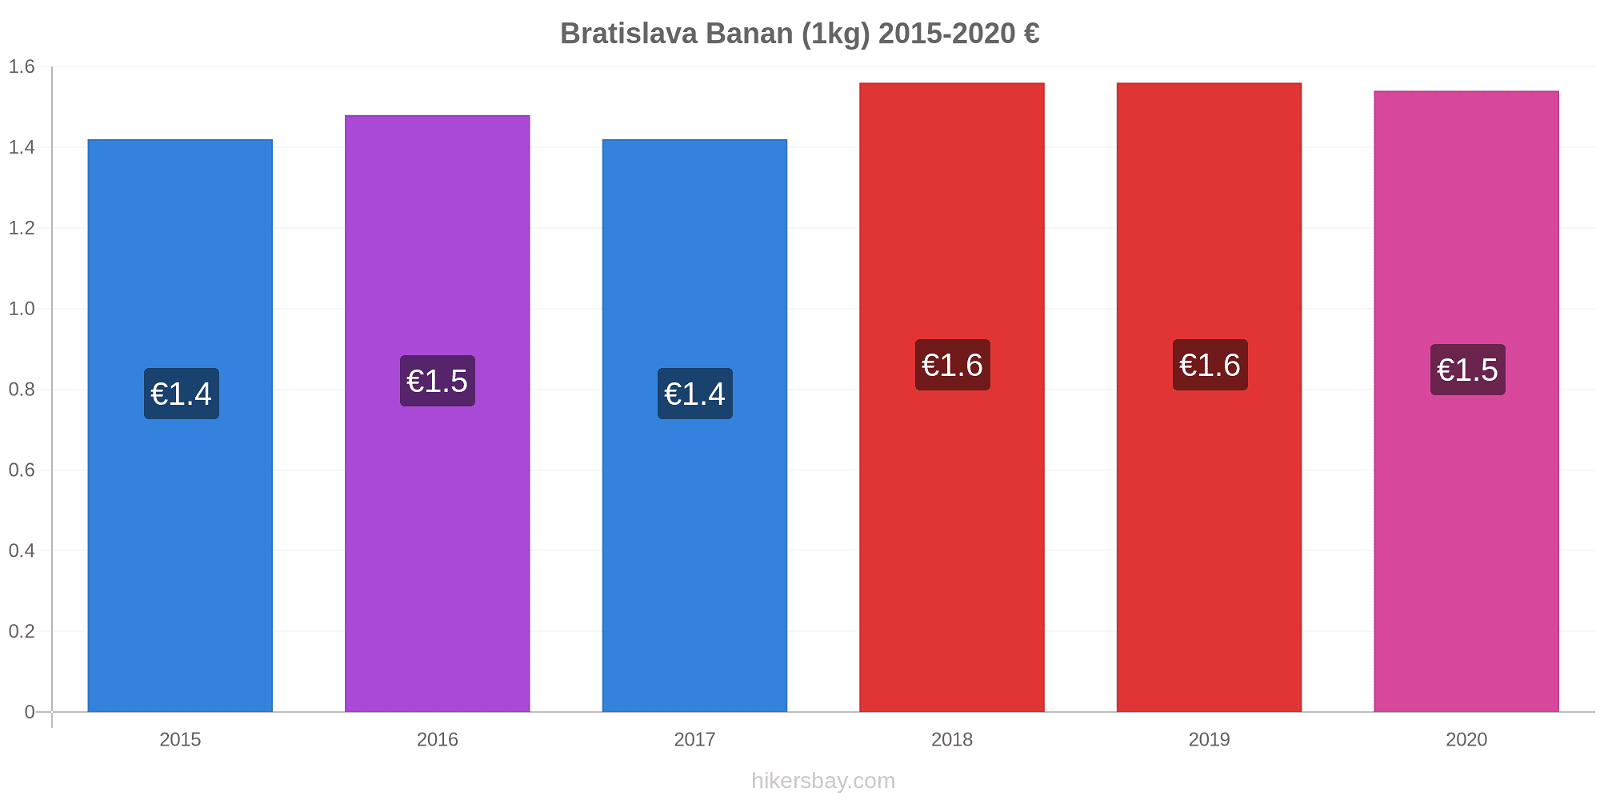 Bratislava prisændringer Banan (1kg) hikersbay.com